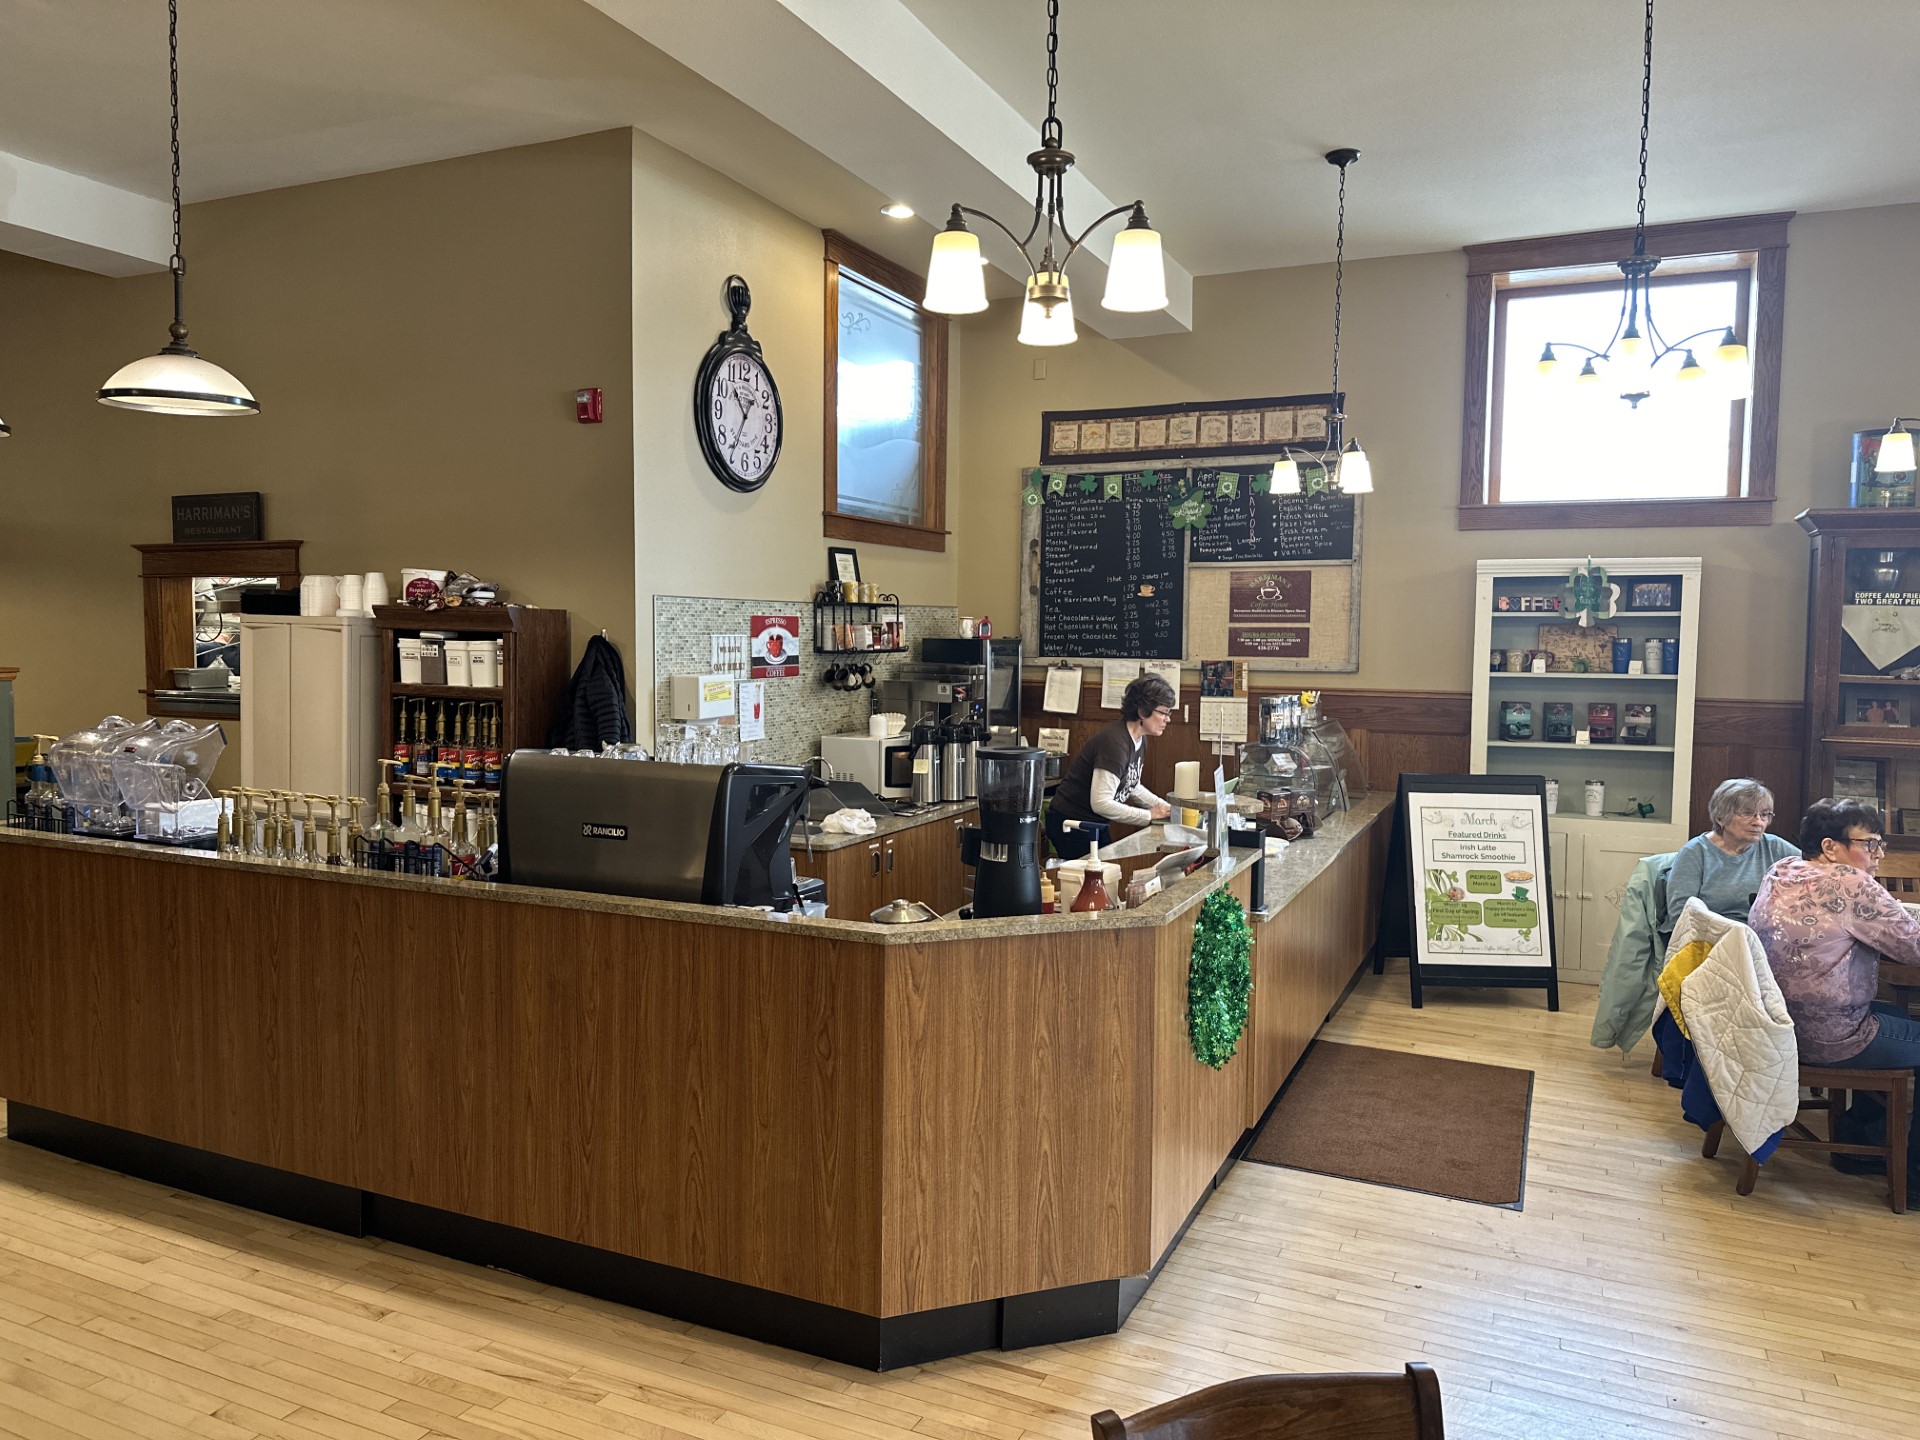 The Maddock coffee shop counter with espresso machine.